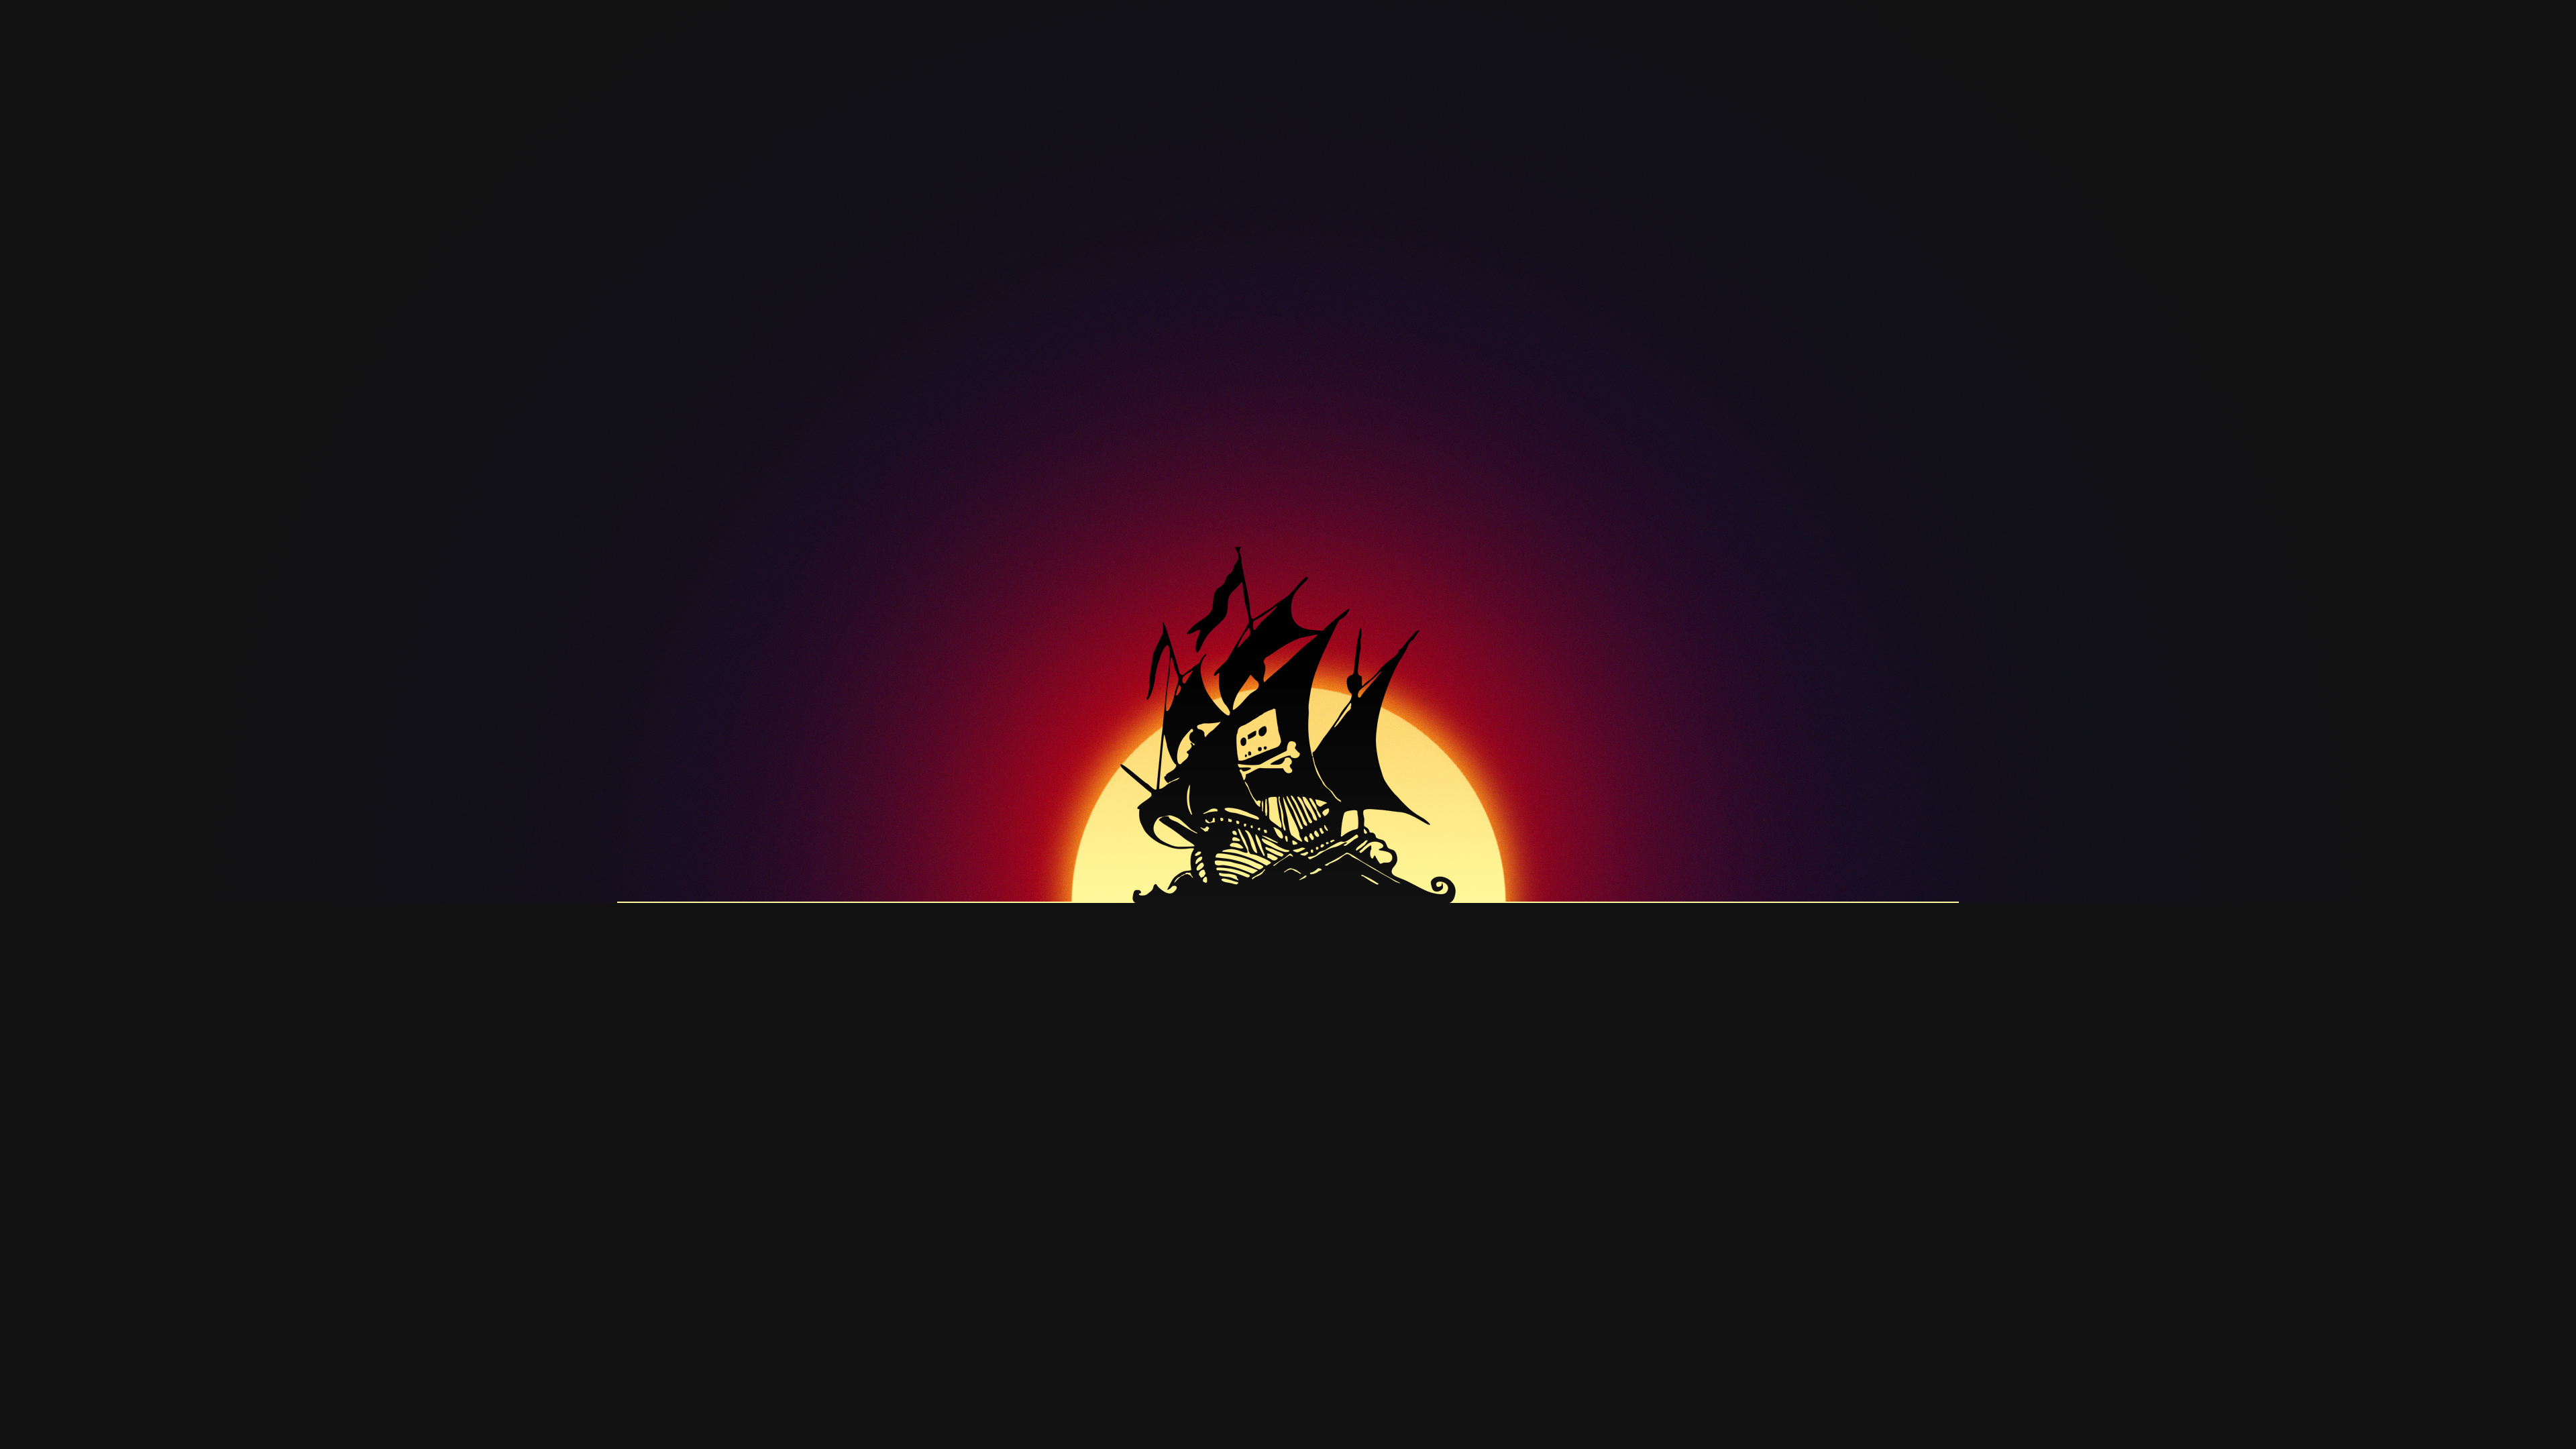 3840x2160 minimalism, Pirate ship, Sun, dark, simple background, The Pirate Bay | Wallpaper